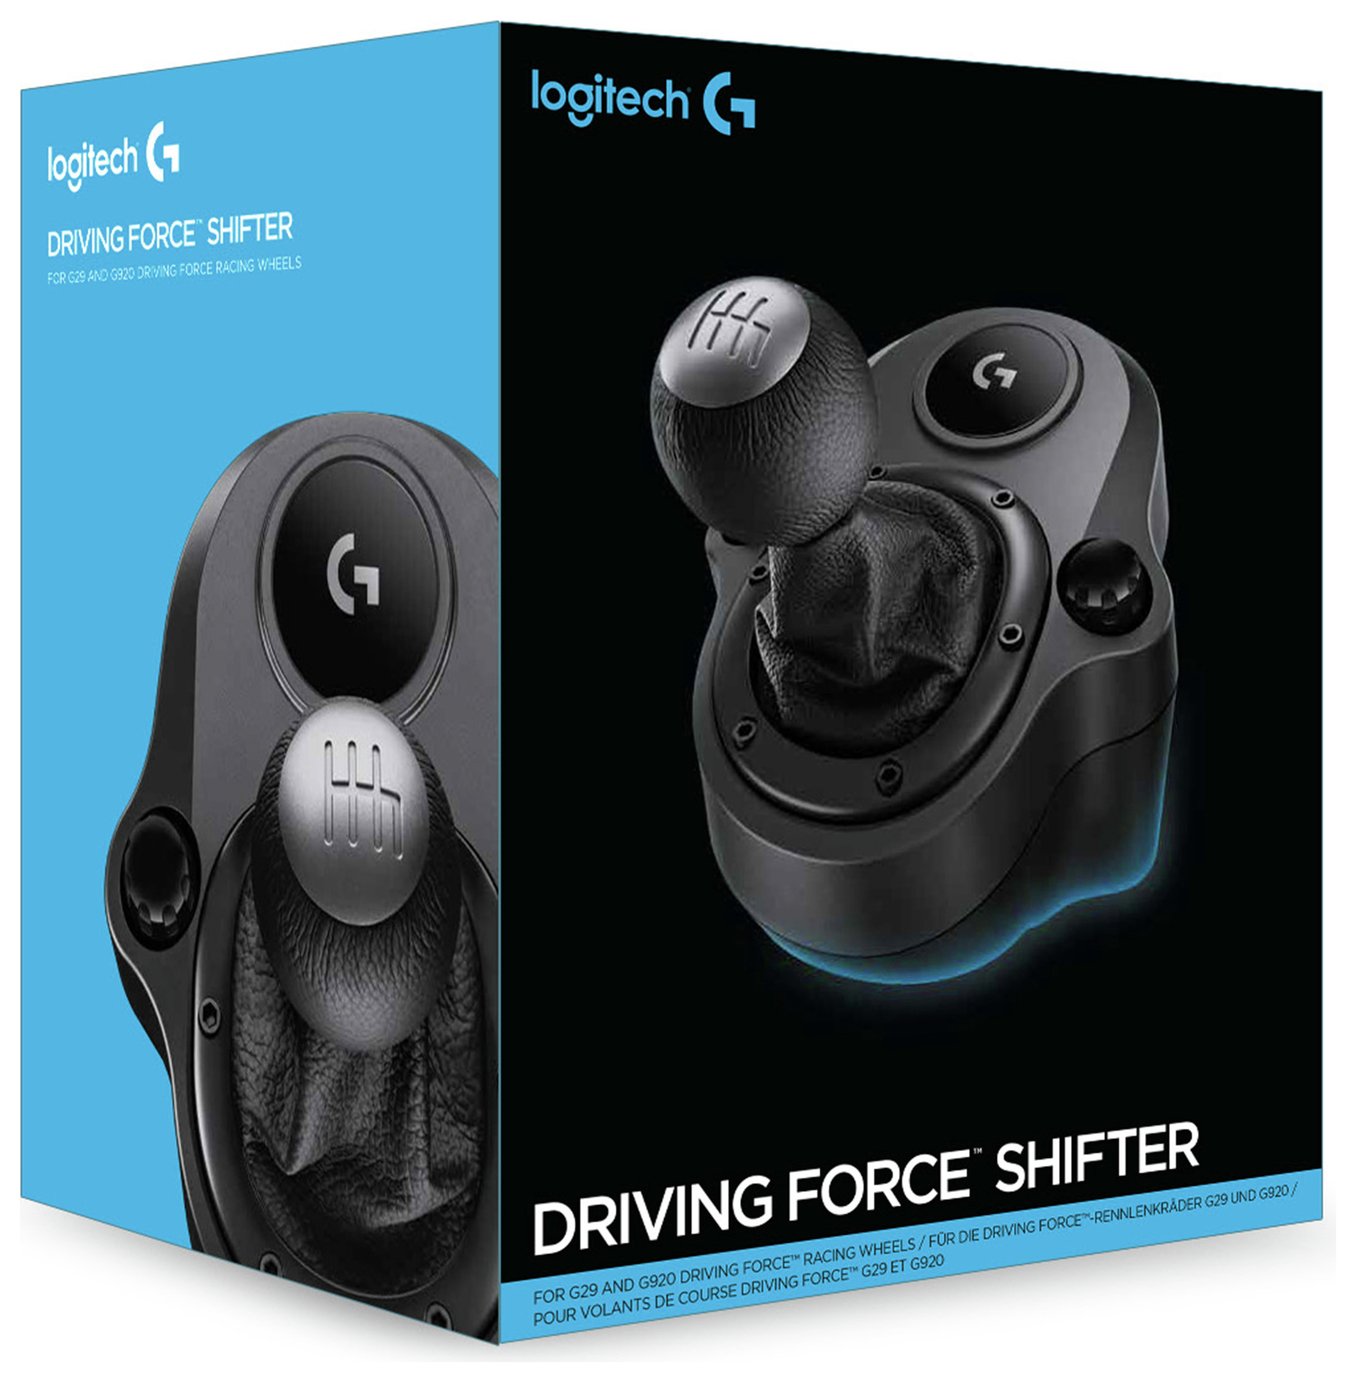 Logitech Driving Force Shifter Controller Review